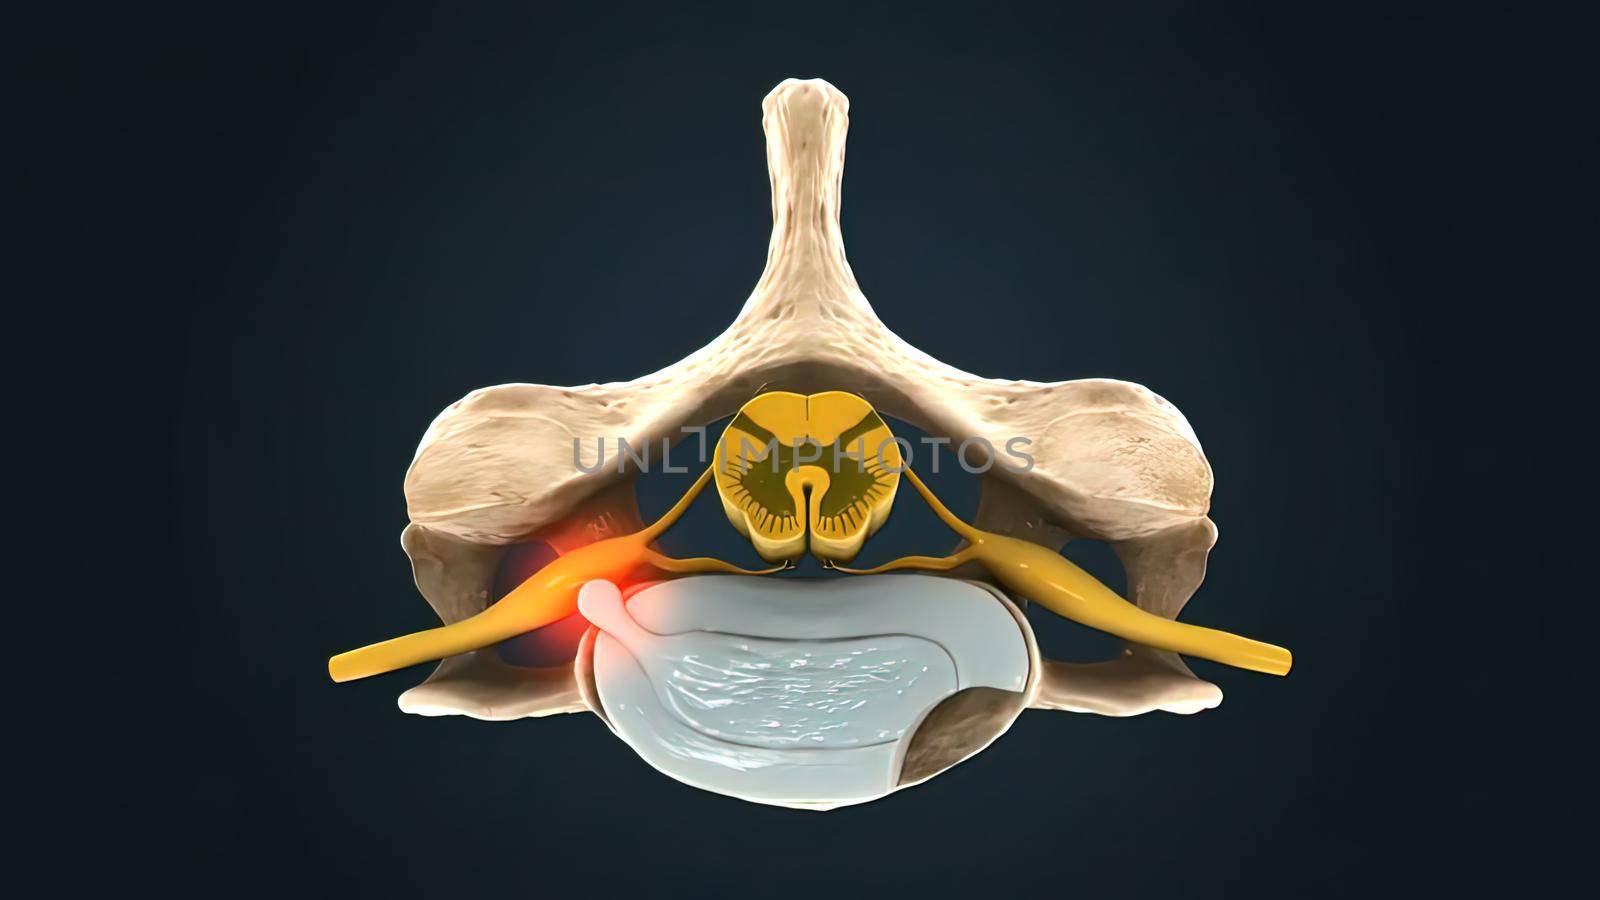 Human Spine In Details: Vertebra, Bone Marrow, Disc And Nerves 3d illustration